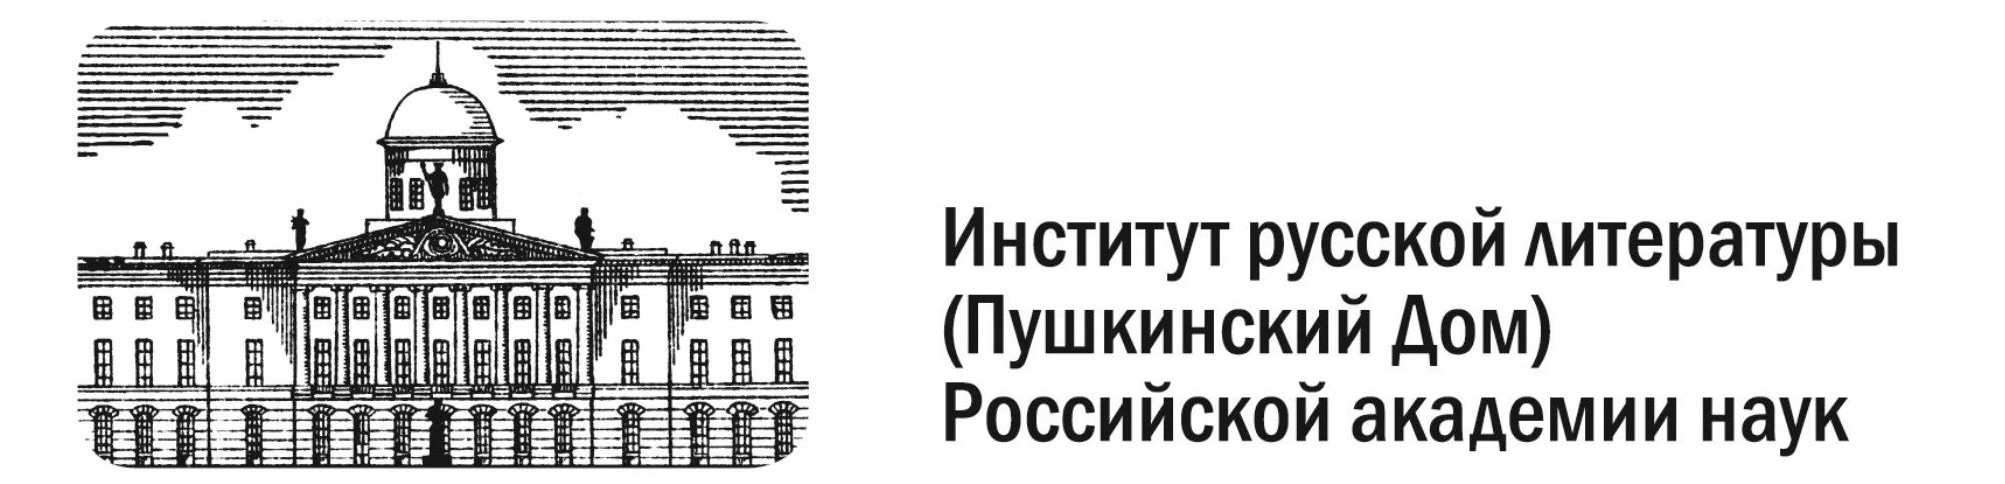 А.Е. Тарасов и А.В. Носов – участники Девятого агиографического семинара